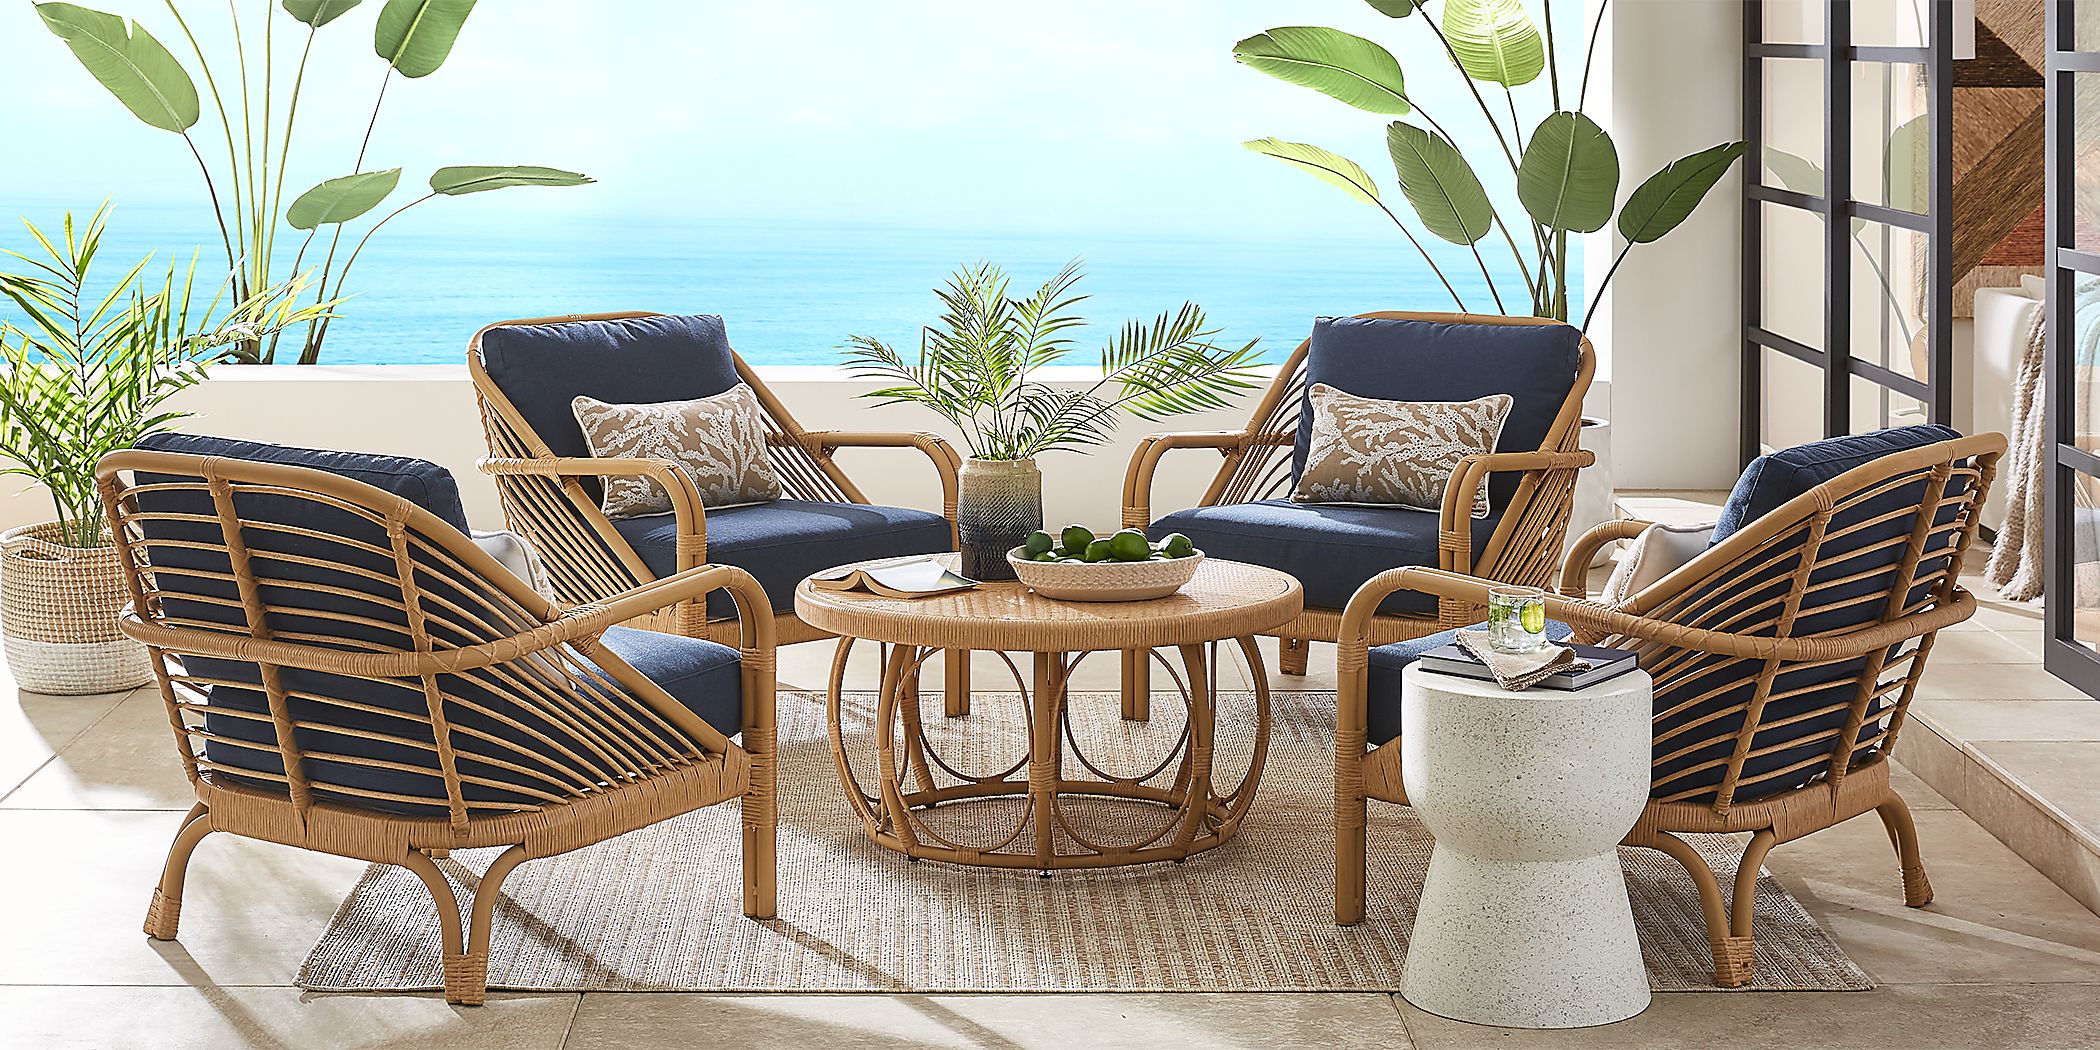 Coronado Sandstone 5 Pc Round Outdoor Chat Seating Set with Indigo Cushions